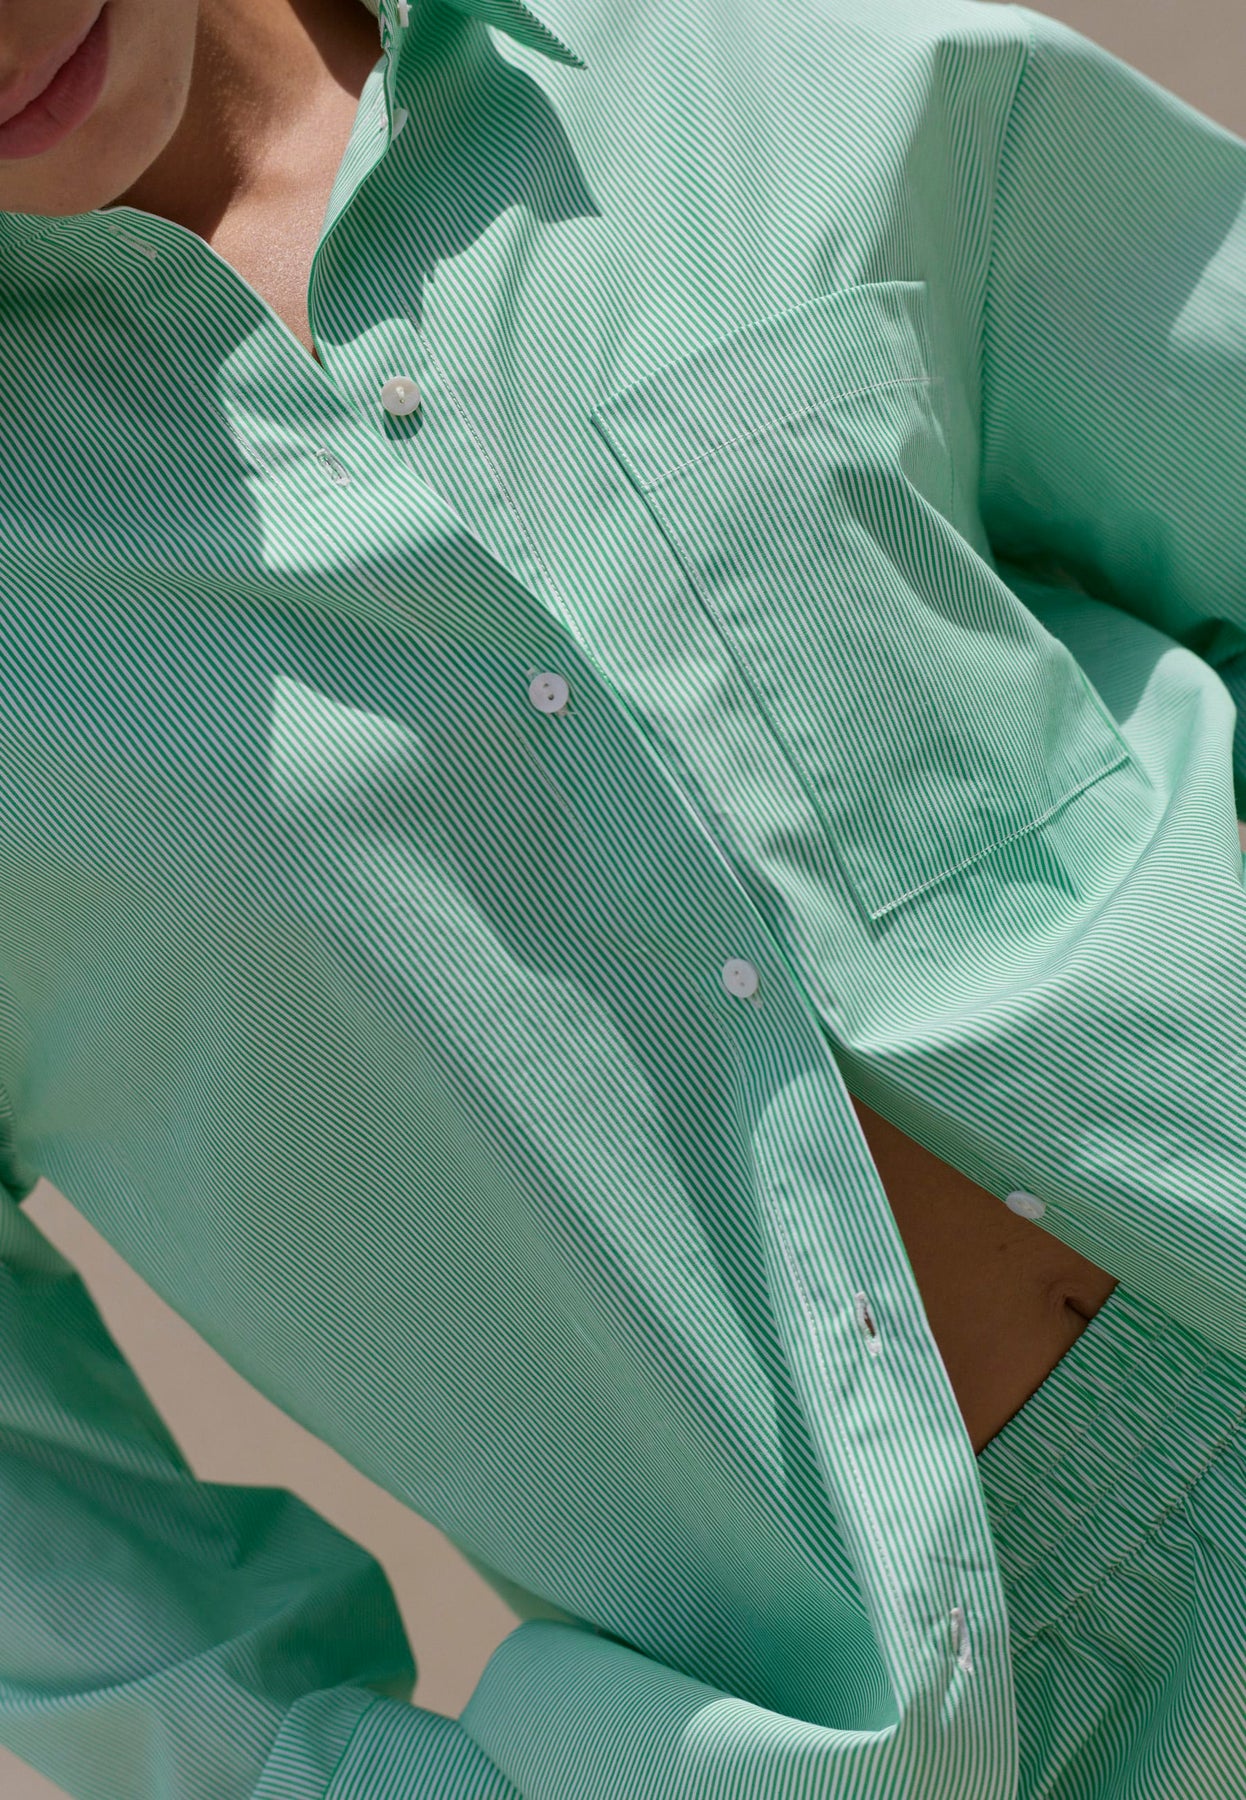 Henriette Shirt Ltd. - Green Stripe